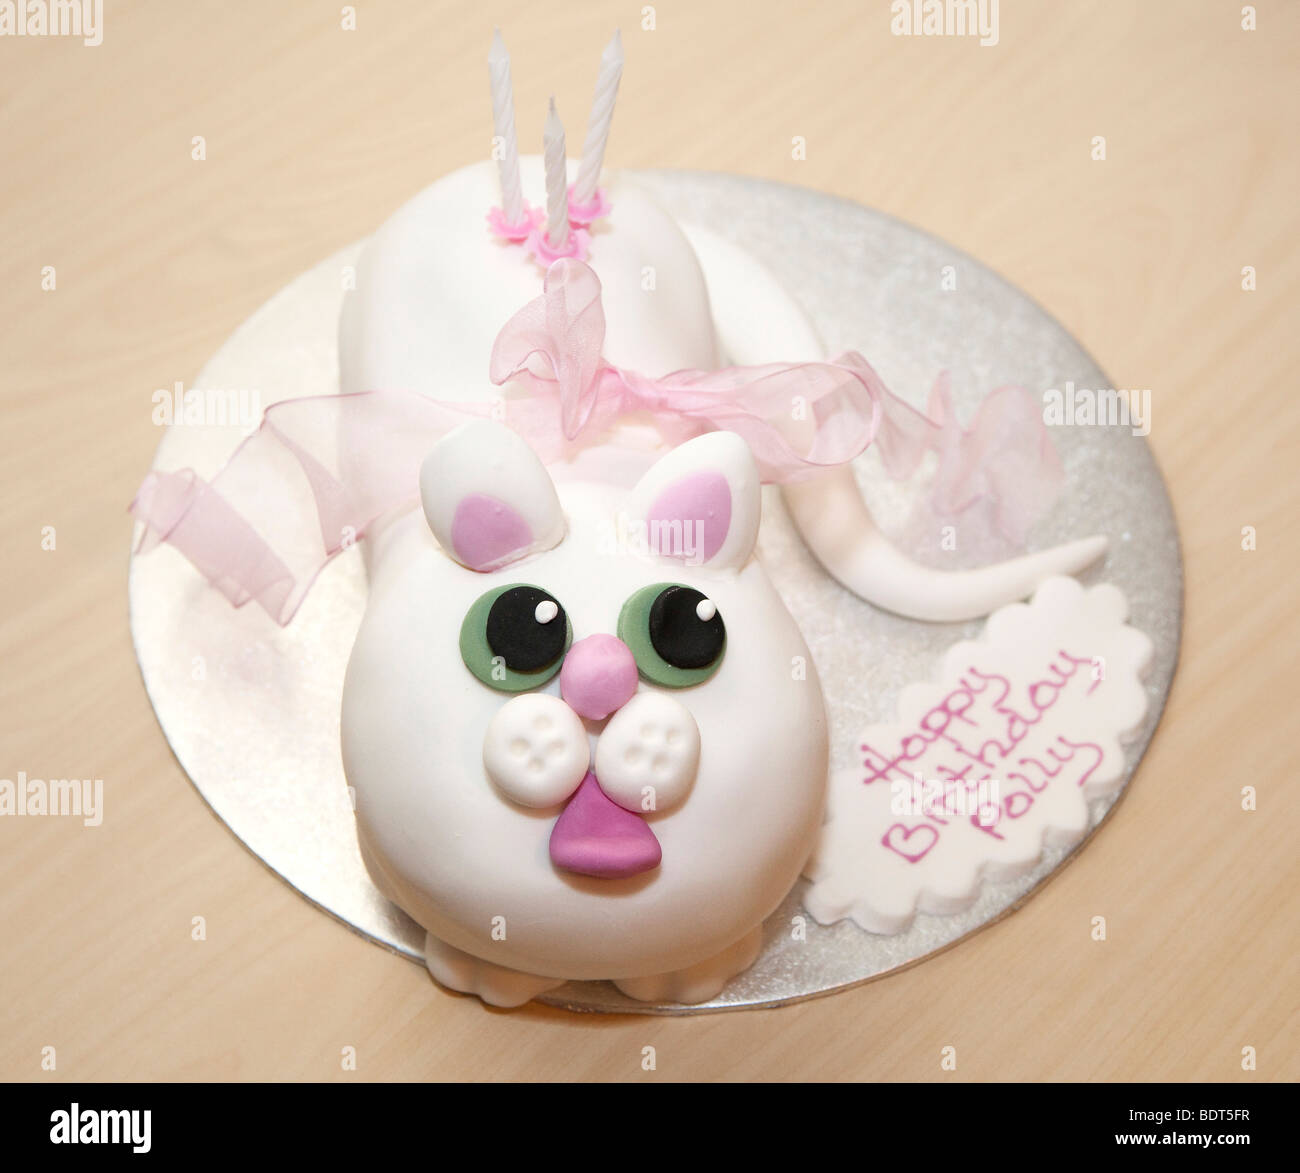 A white cat novelty birthday cake Stock Photo